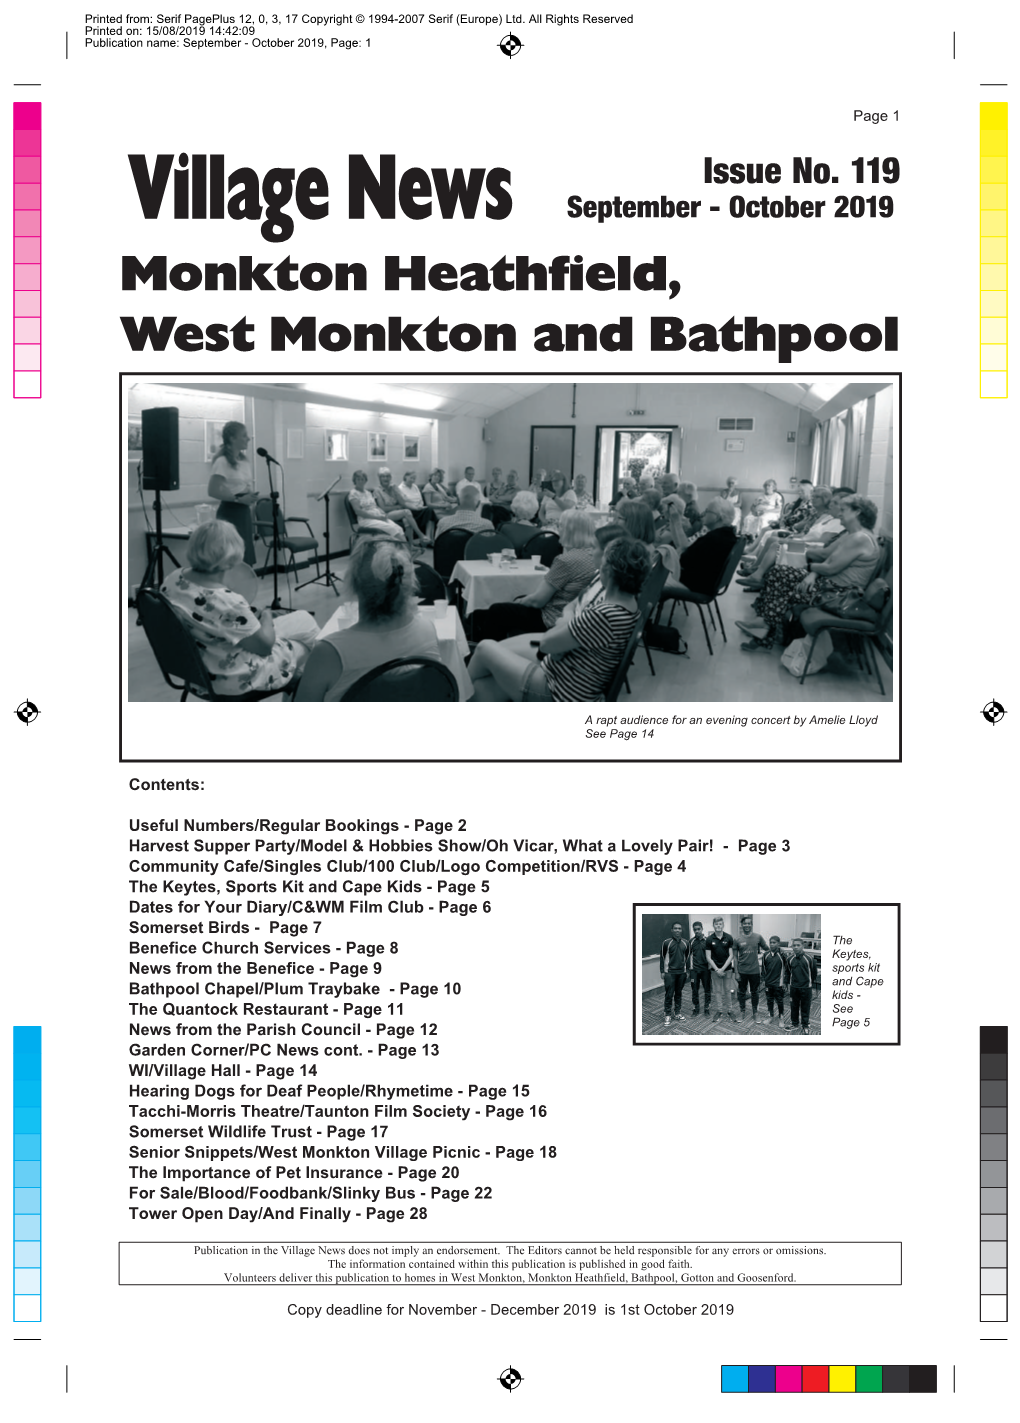 September - October 2019 Monkton Heathfield, West Monkton and Bathpool